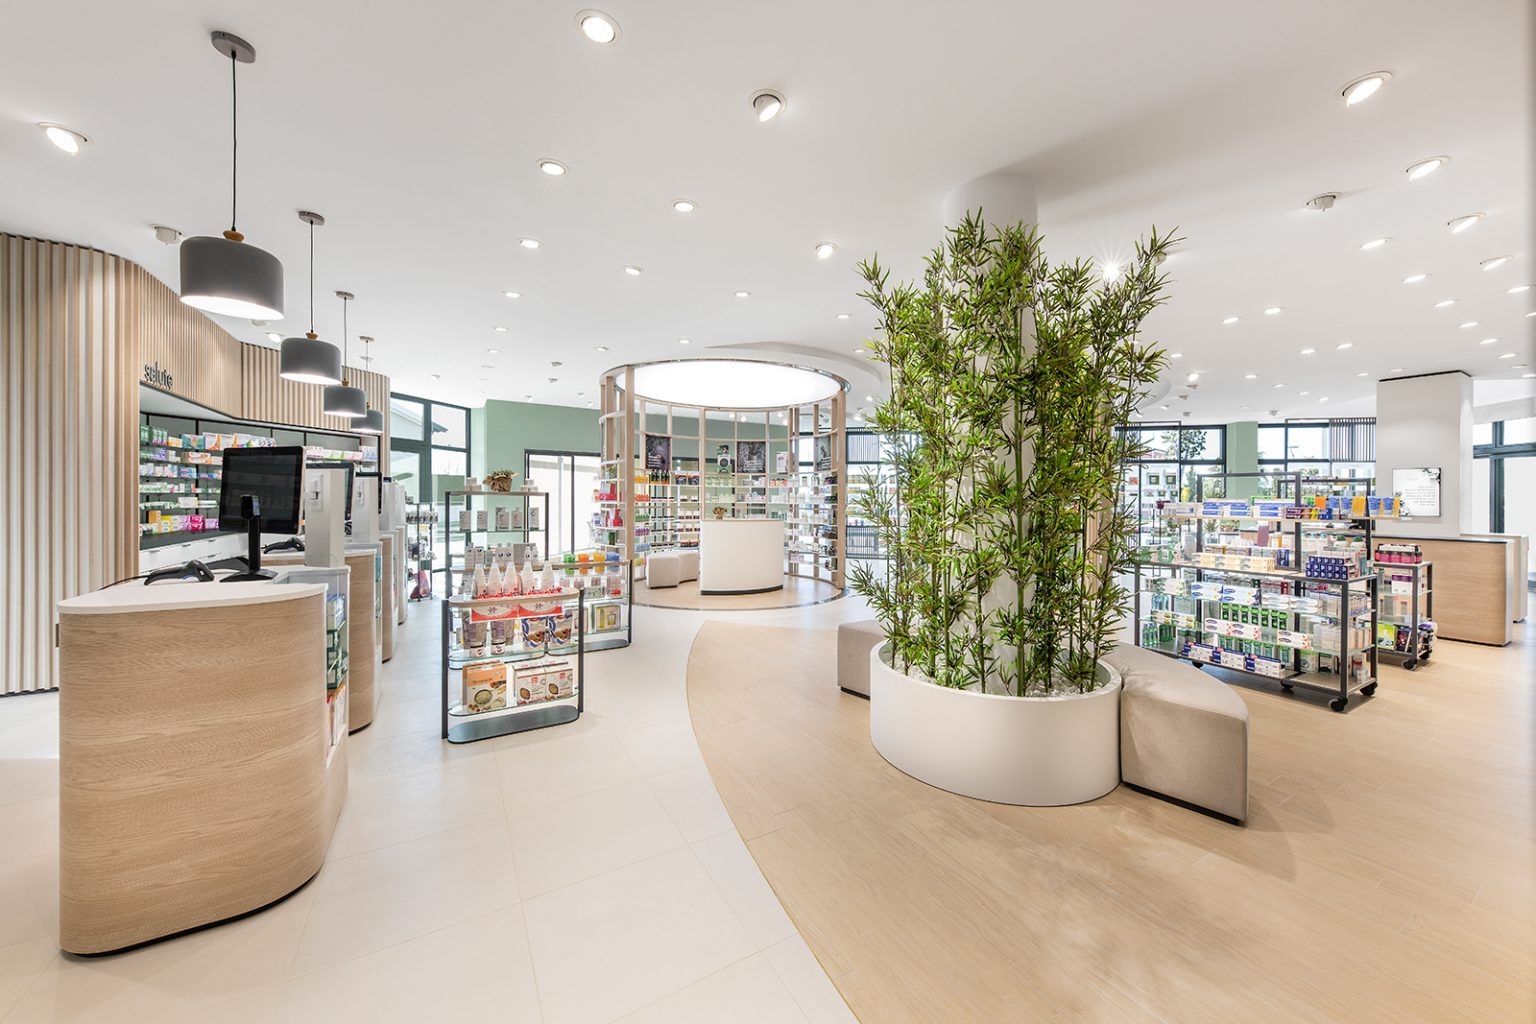 Shopping experience in Farmacia Essenza by Amlab